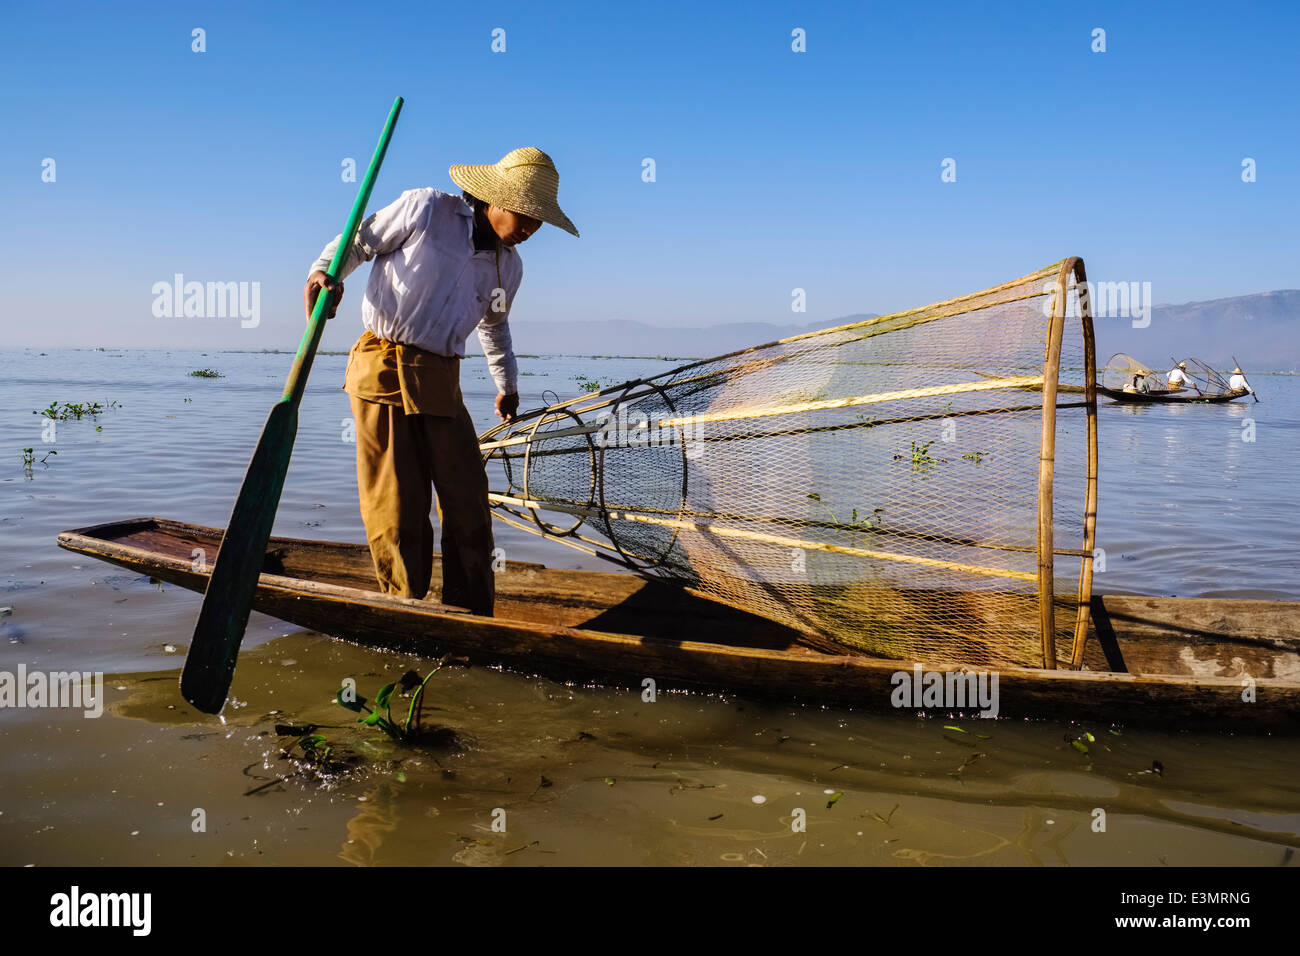 Fisher sul Lago Inle, Myanmar, Asia Foto Stock